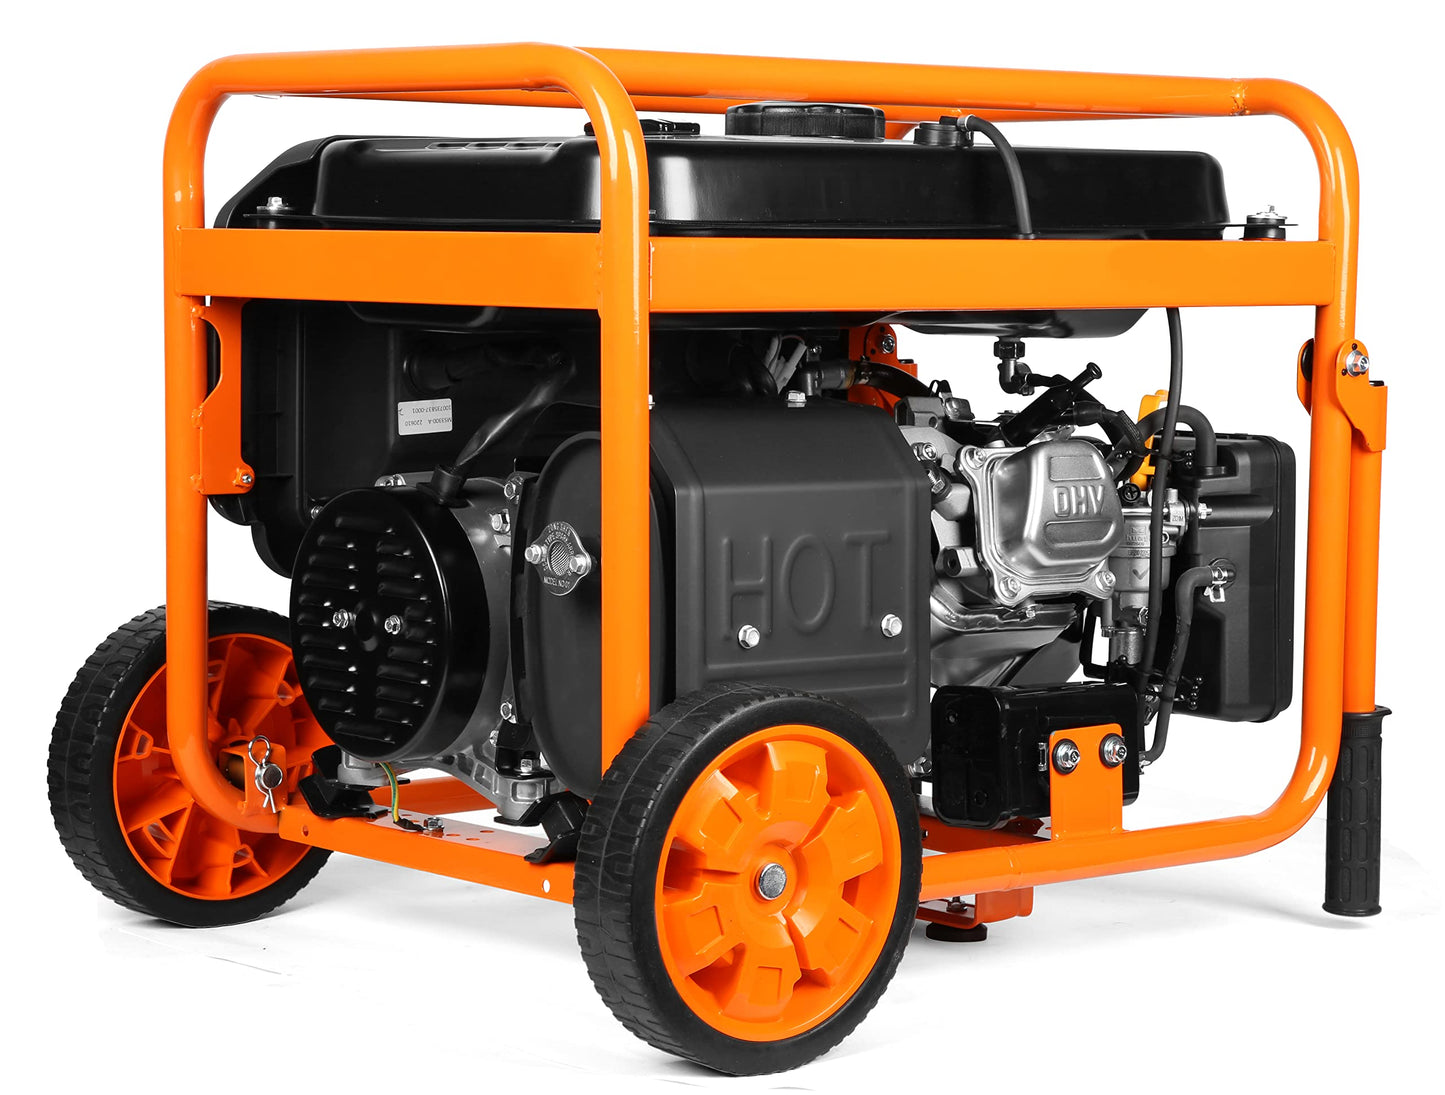 WEN DF430X 4375-Watt Dual Fuel Portable Generator with Wheel Kit and CO Shutdown Sensor, Black 4375W + Dual Fuel + Recoil Start